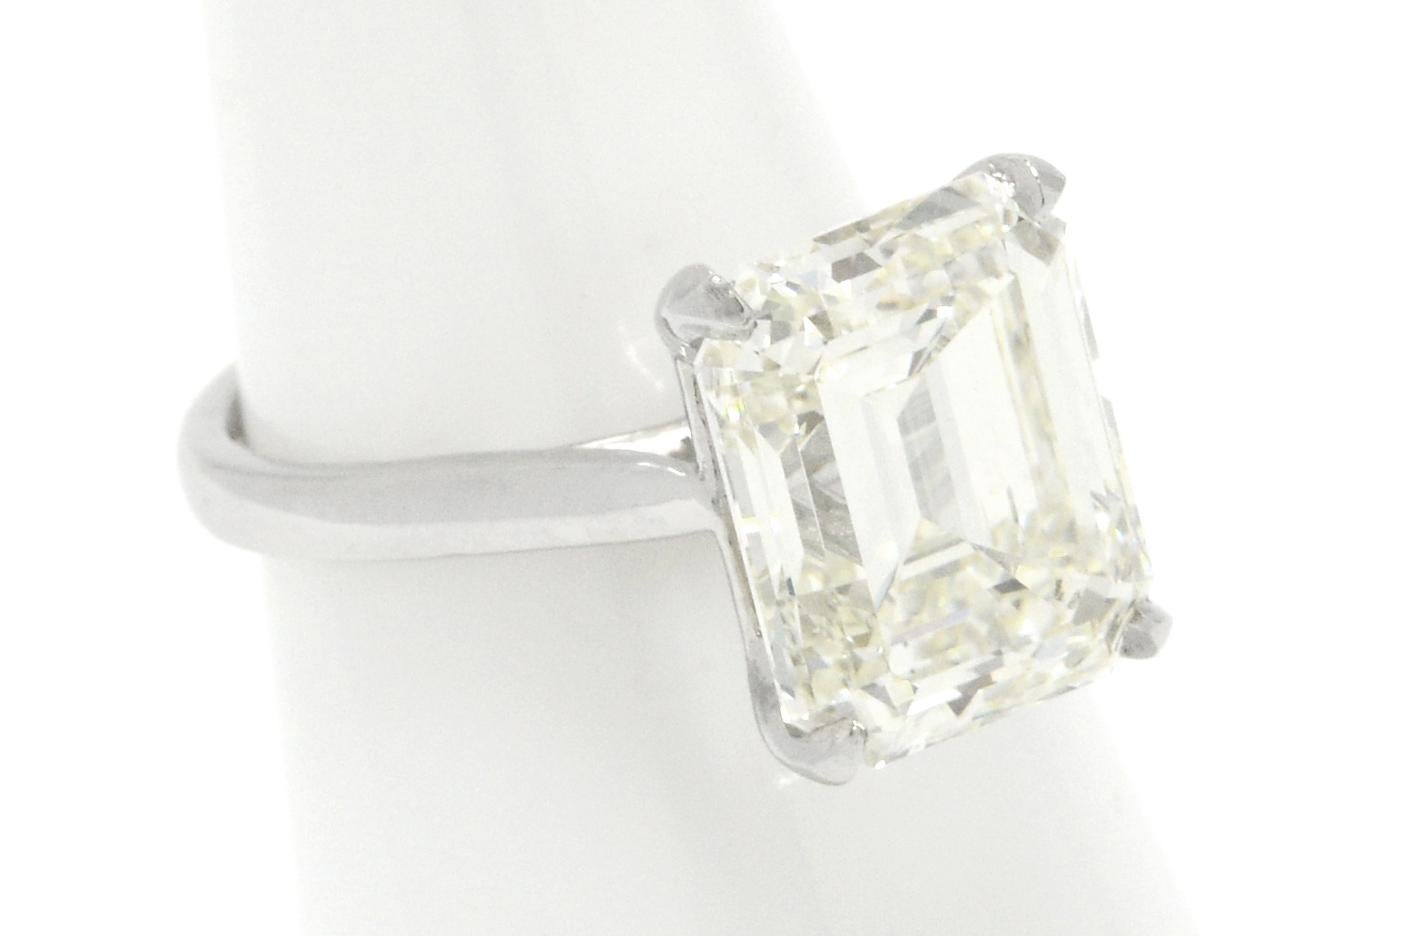 8 carat diamond ring emerald cut